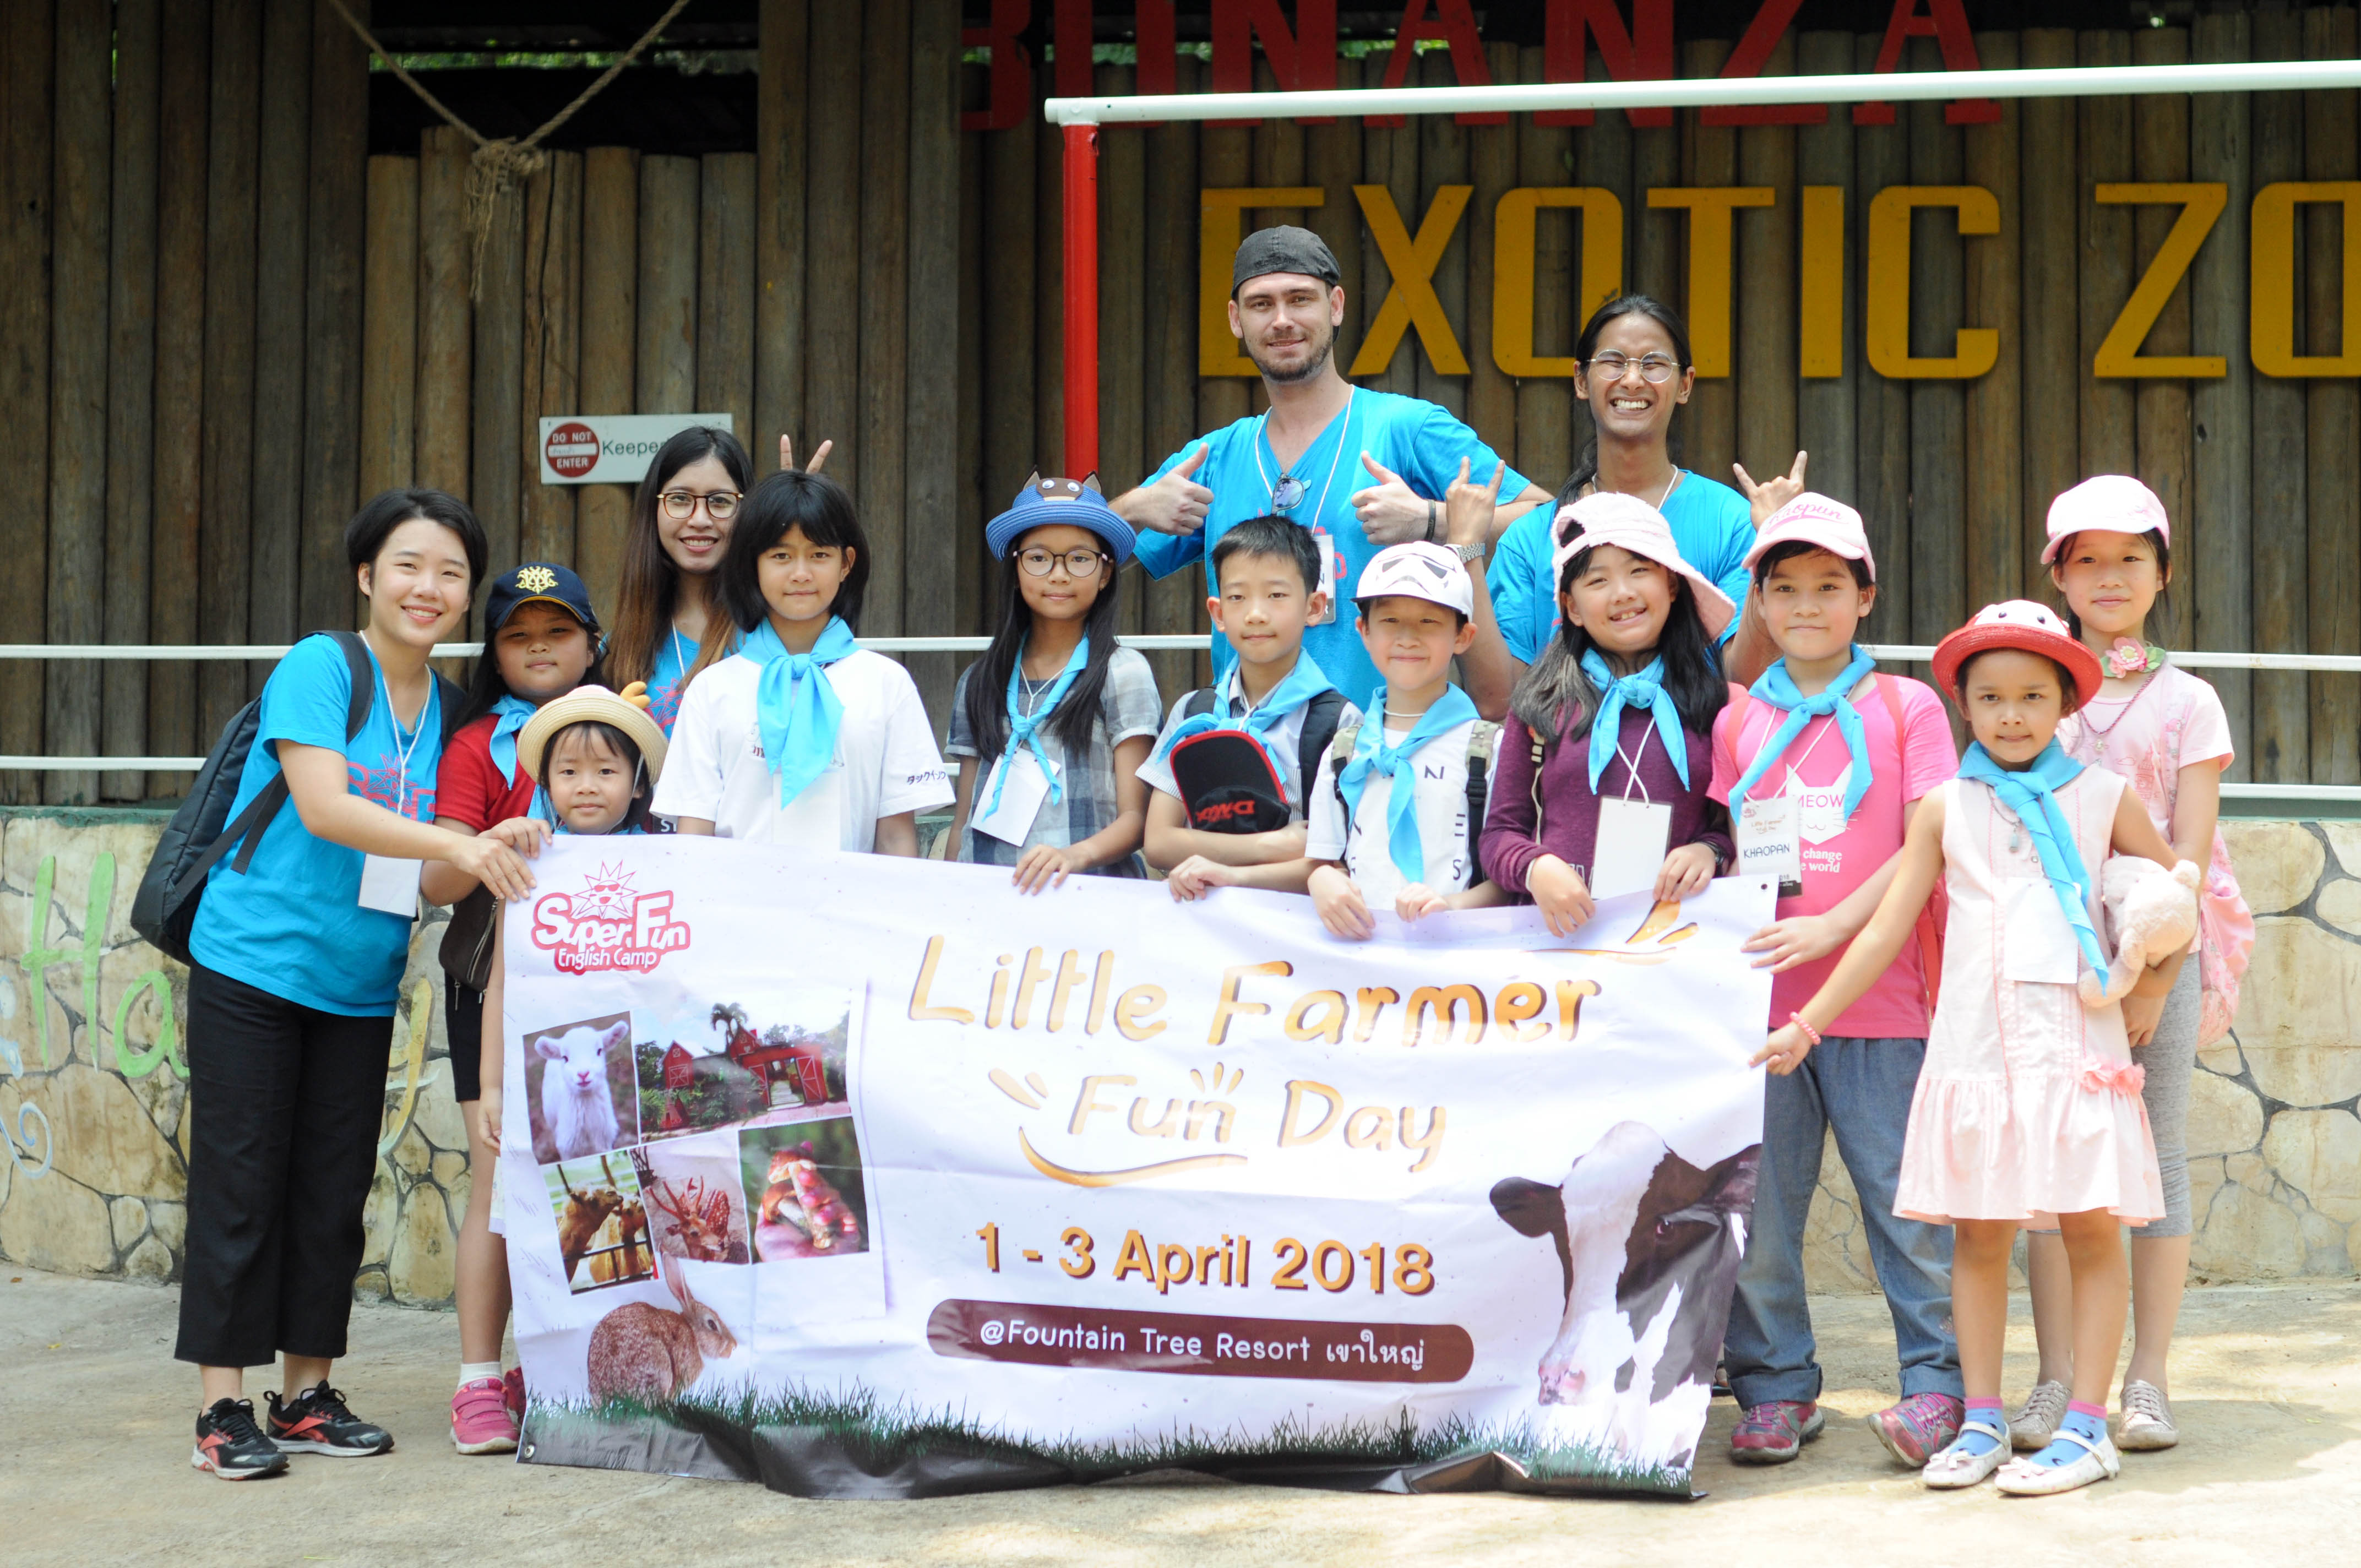 Little Farmer Fun Day at Fountain Tree Resort, khao yai